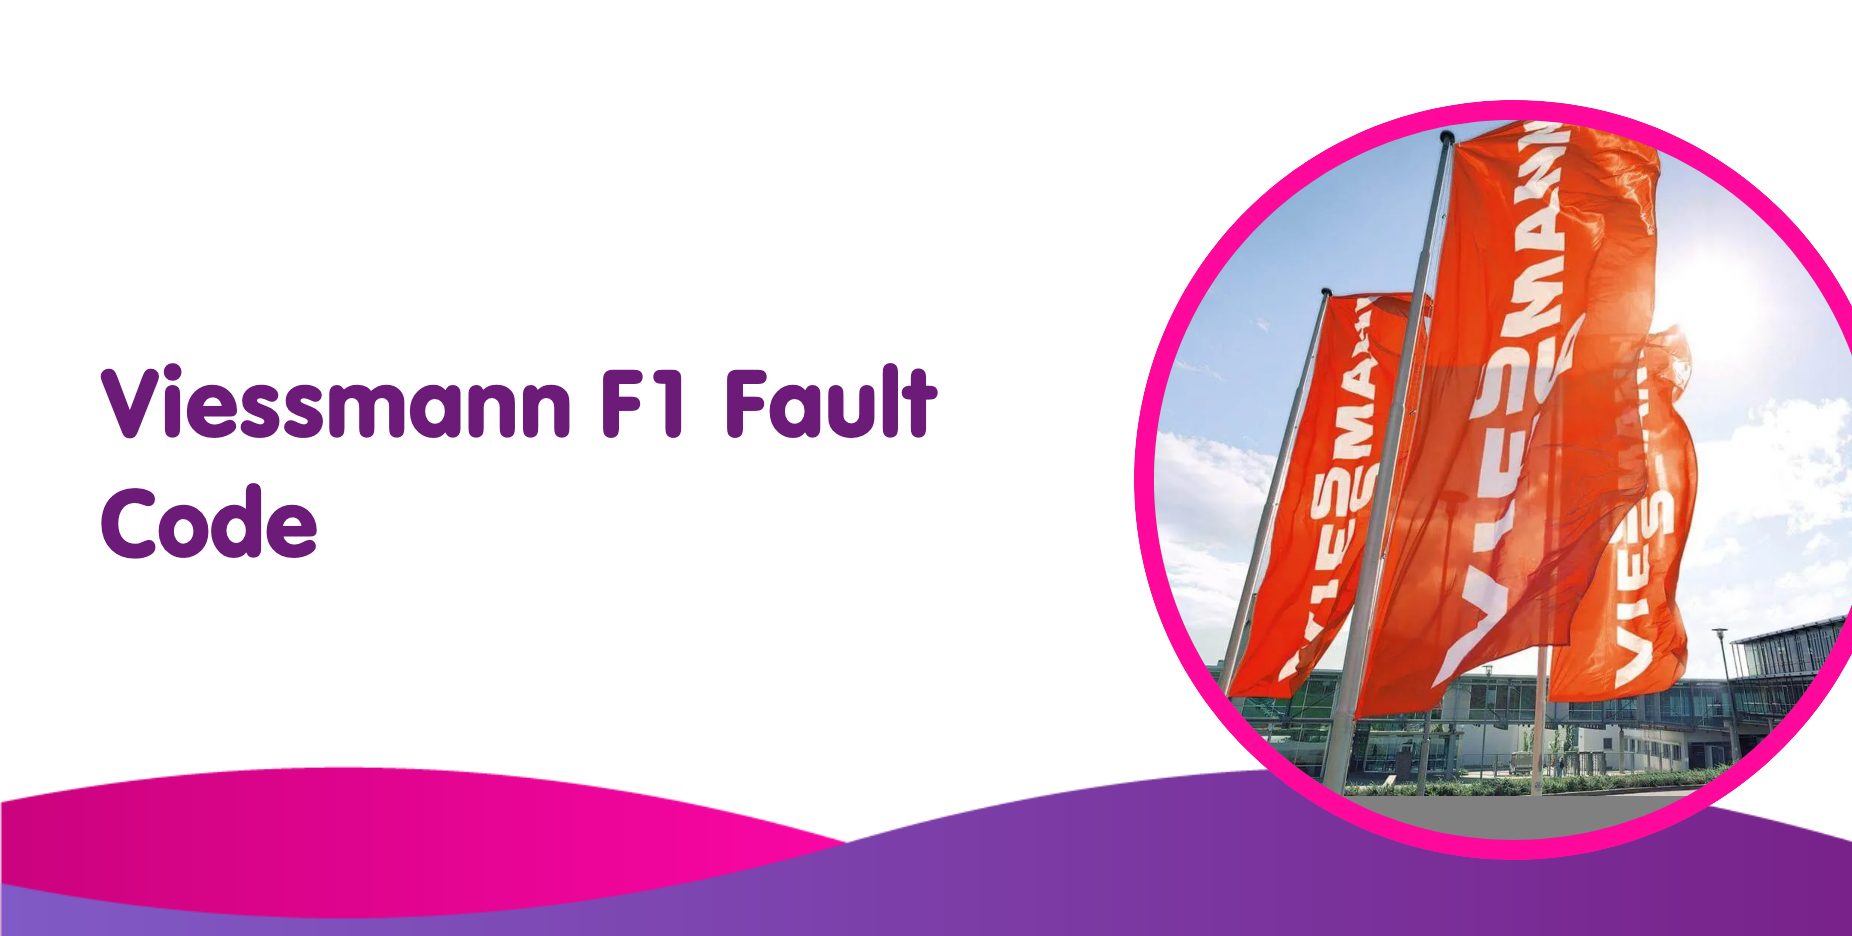 viessmann f1 fault code